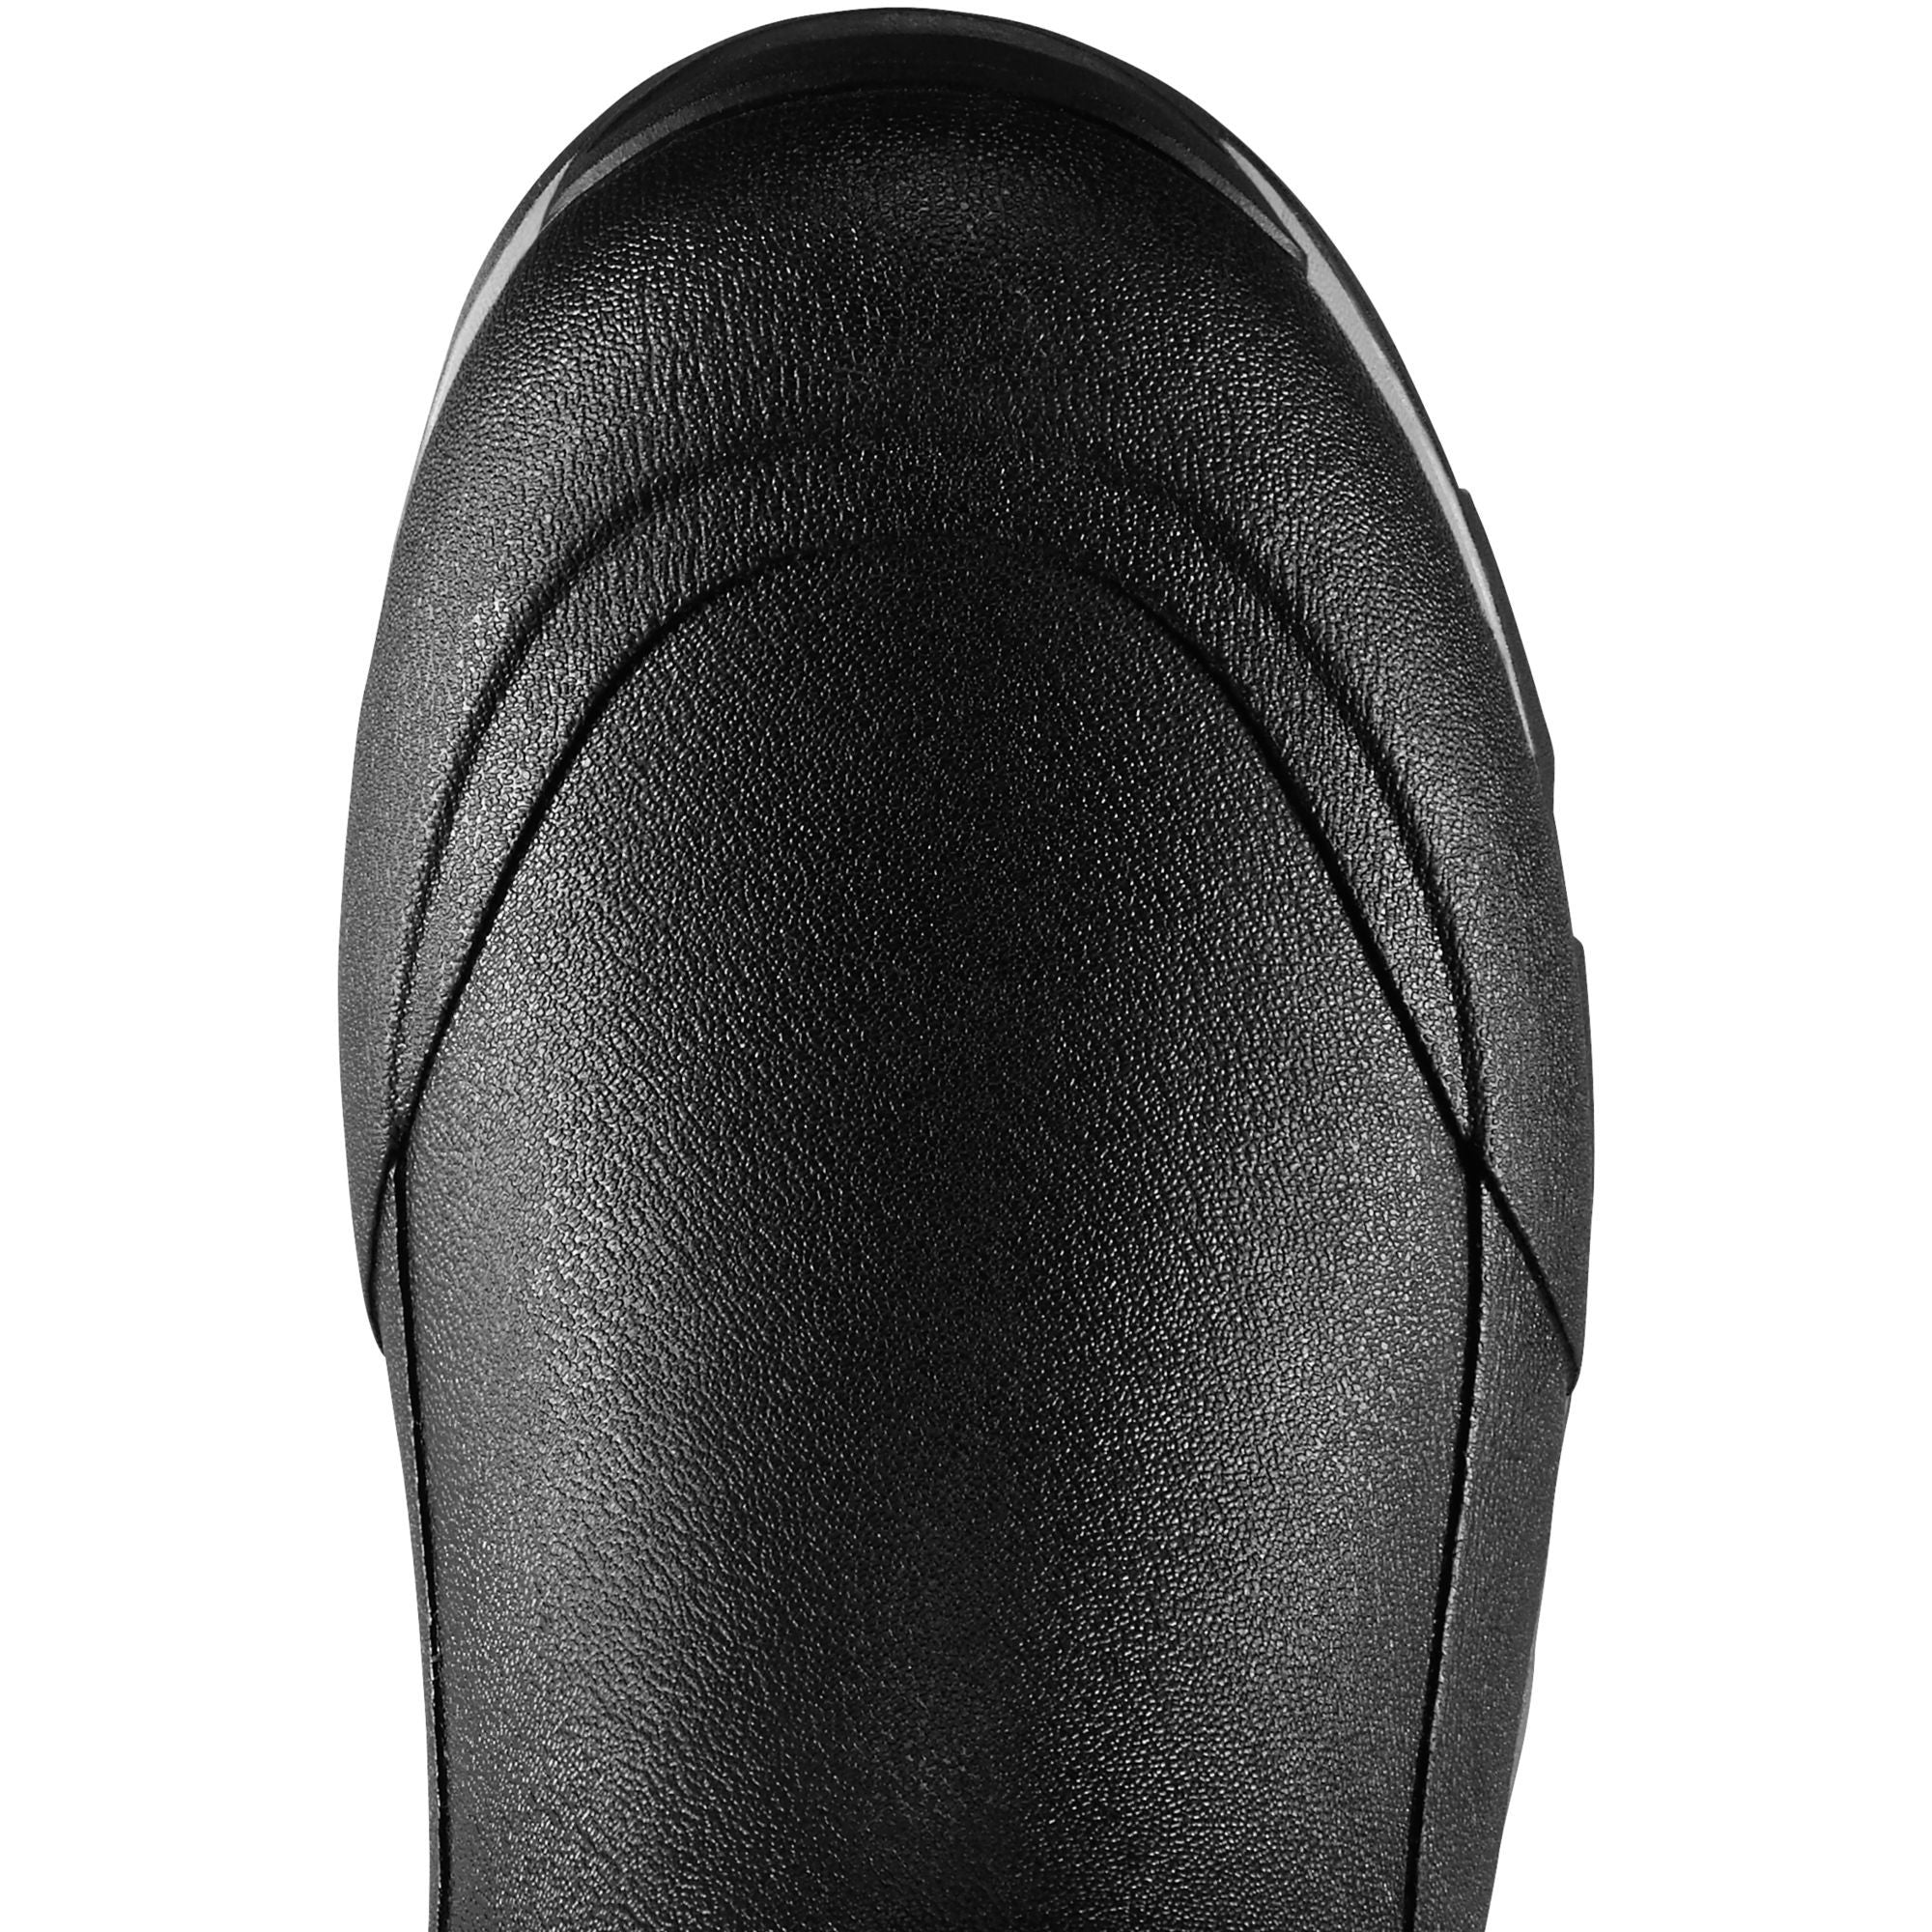 LaCrosse Men's Alpha Thermal 16" Ins Rubber Work Boot Black  - 644101  - Overlook Boots